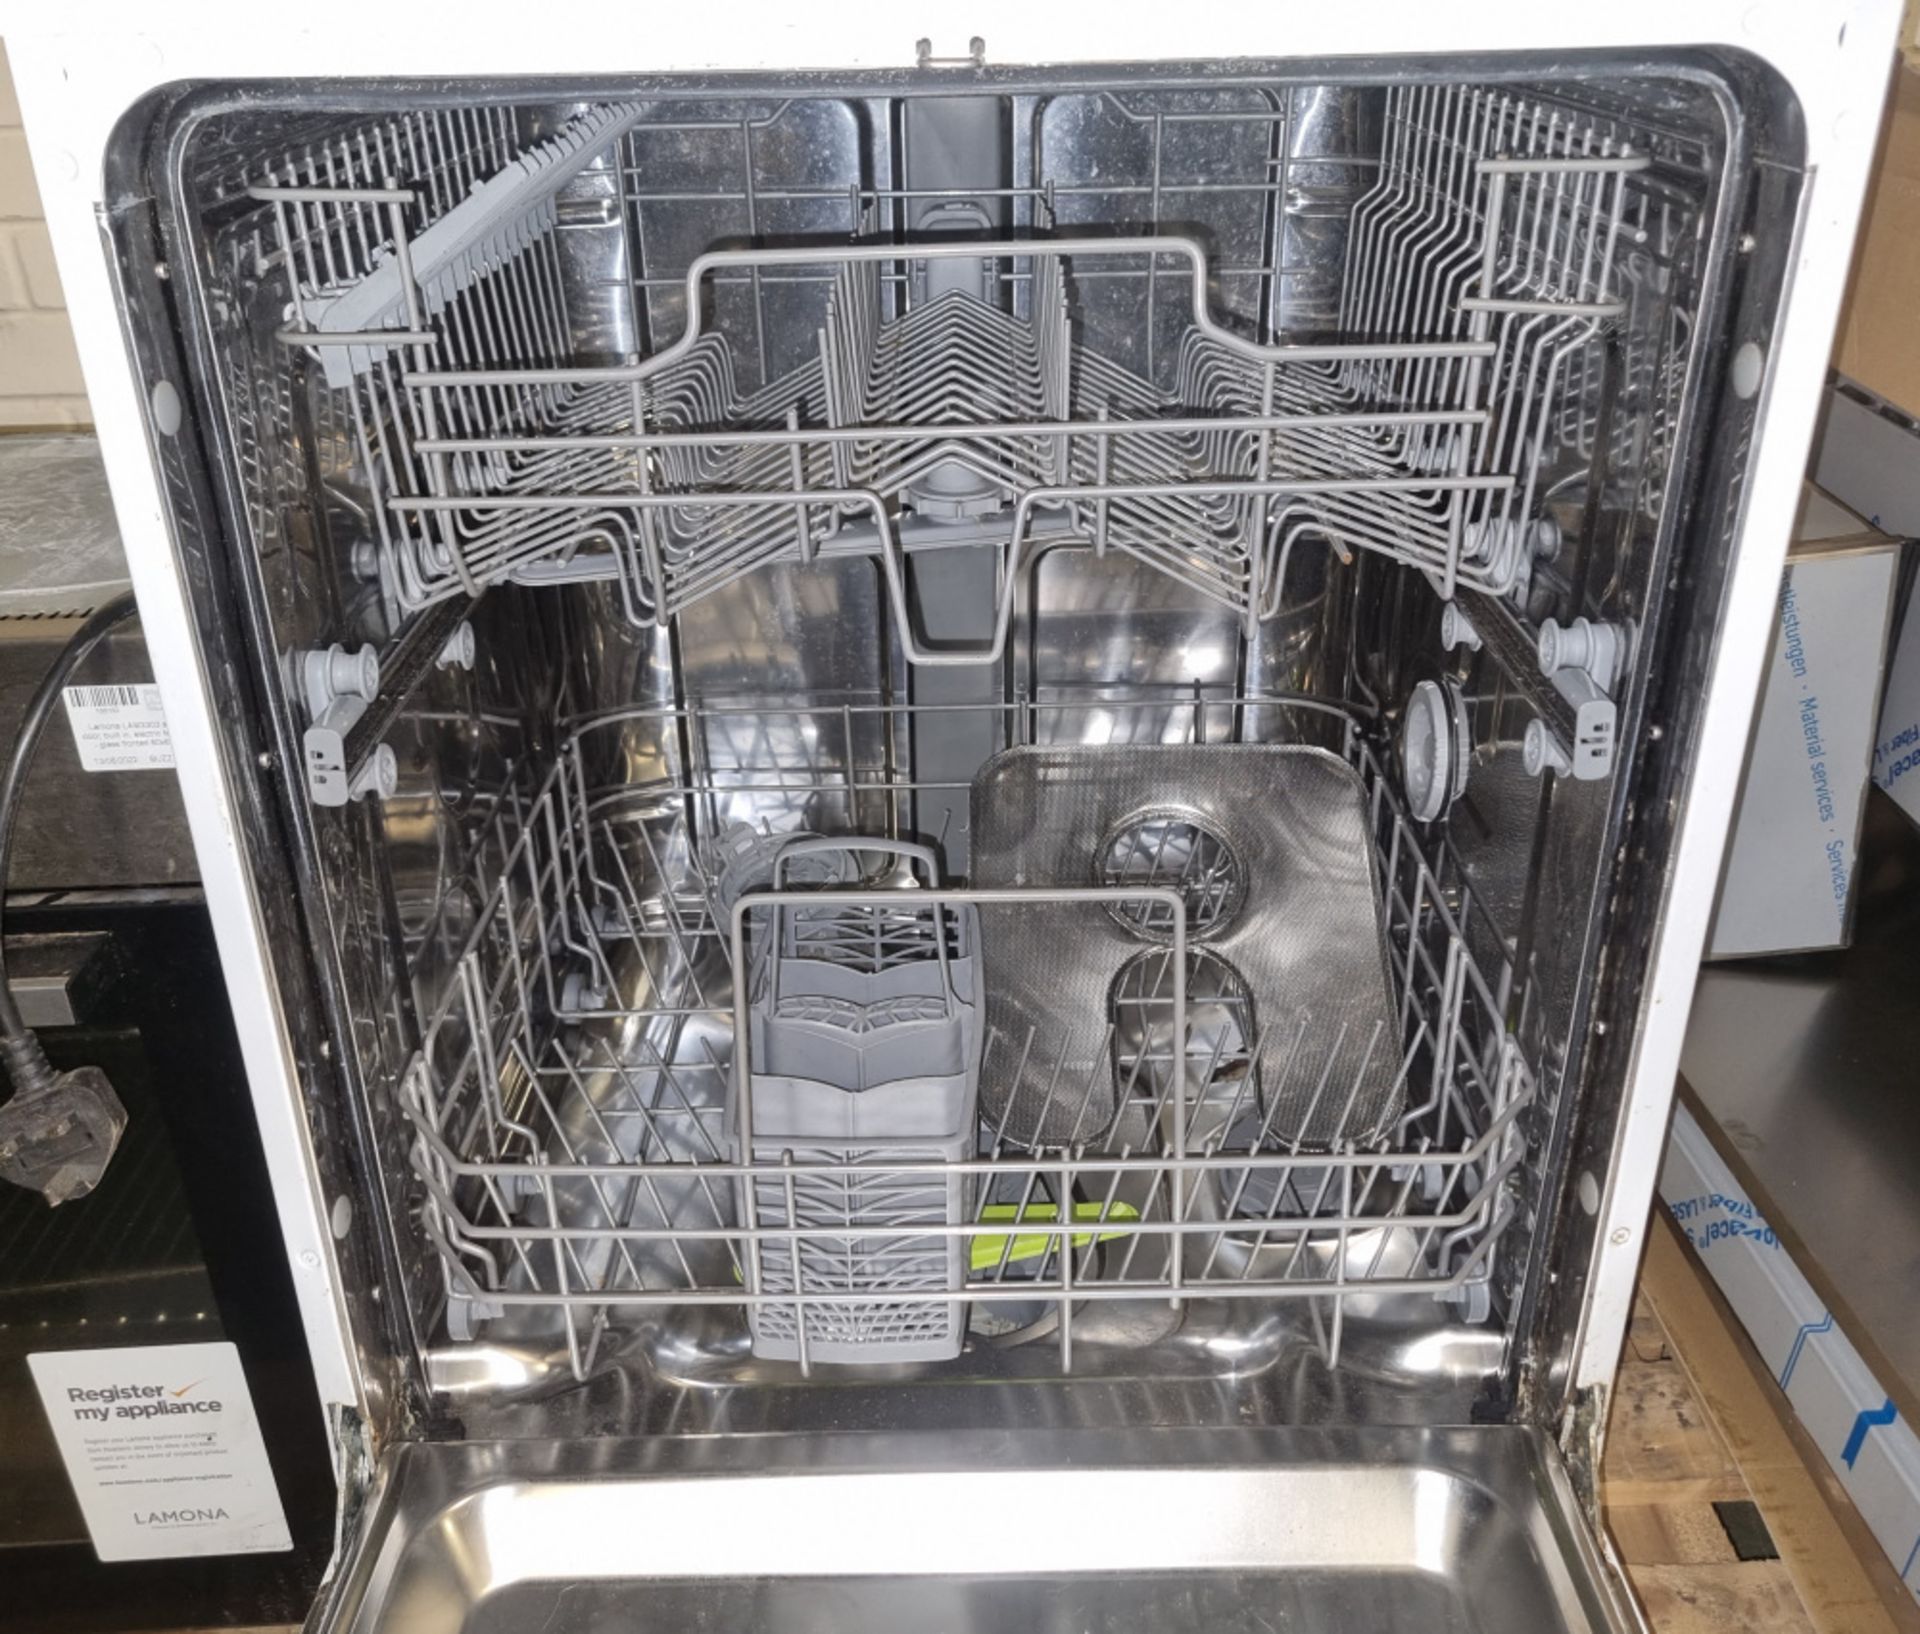 Smeg Dishwasher - L600 x D600 x H850mm - Image 4 of 7